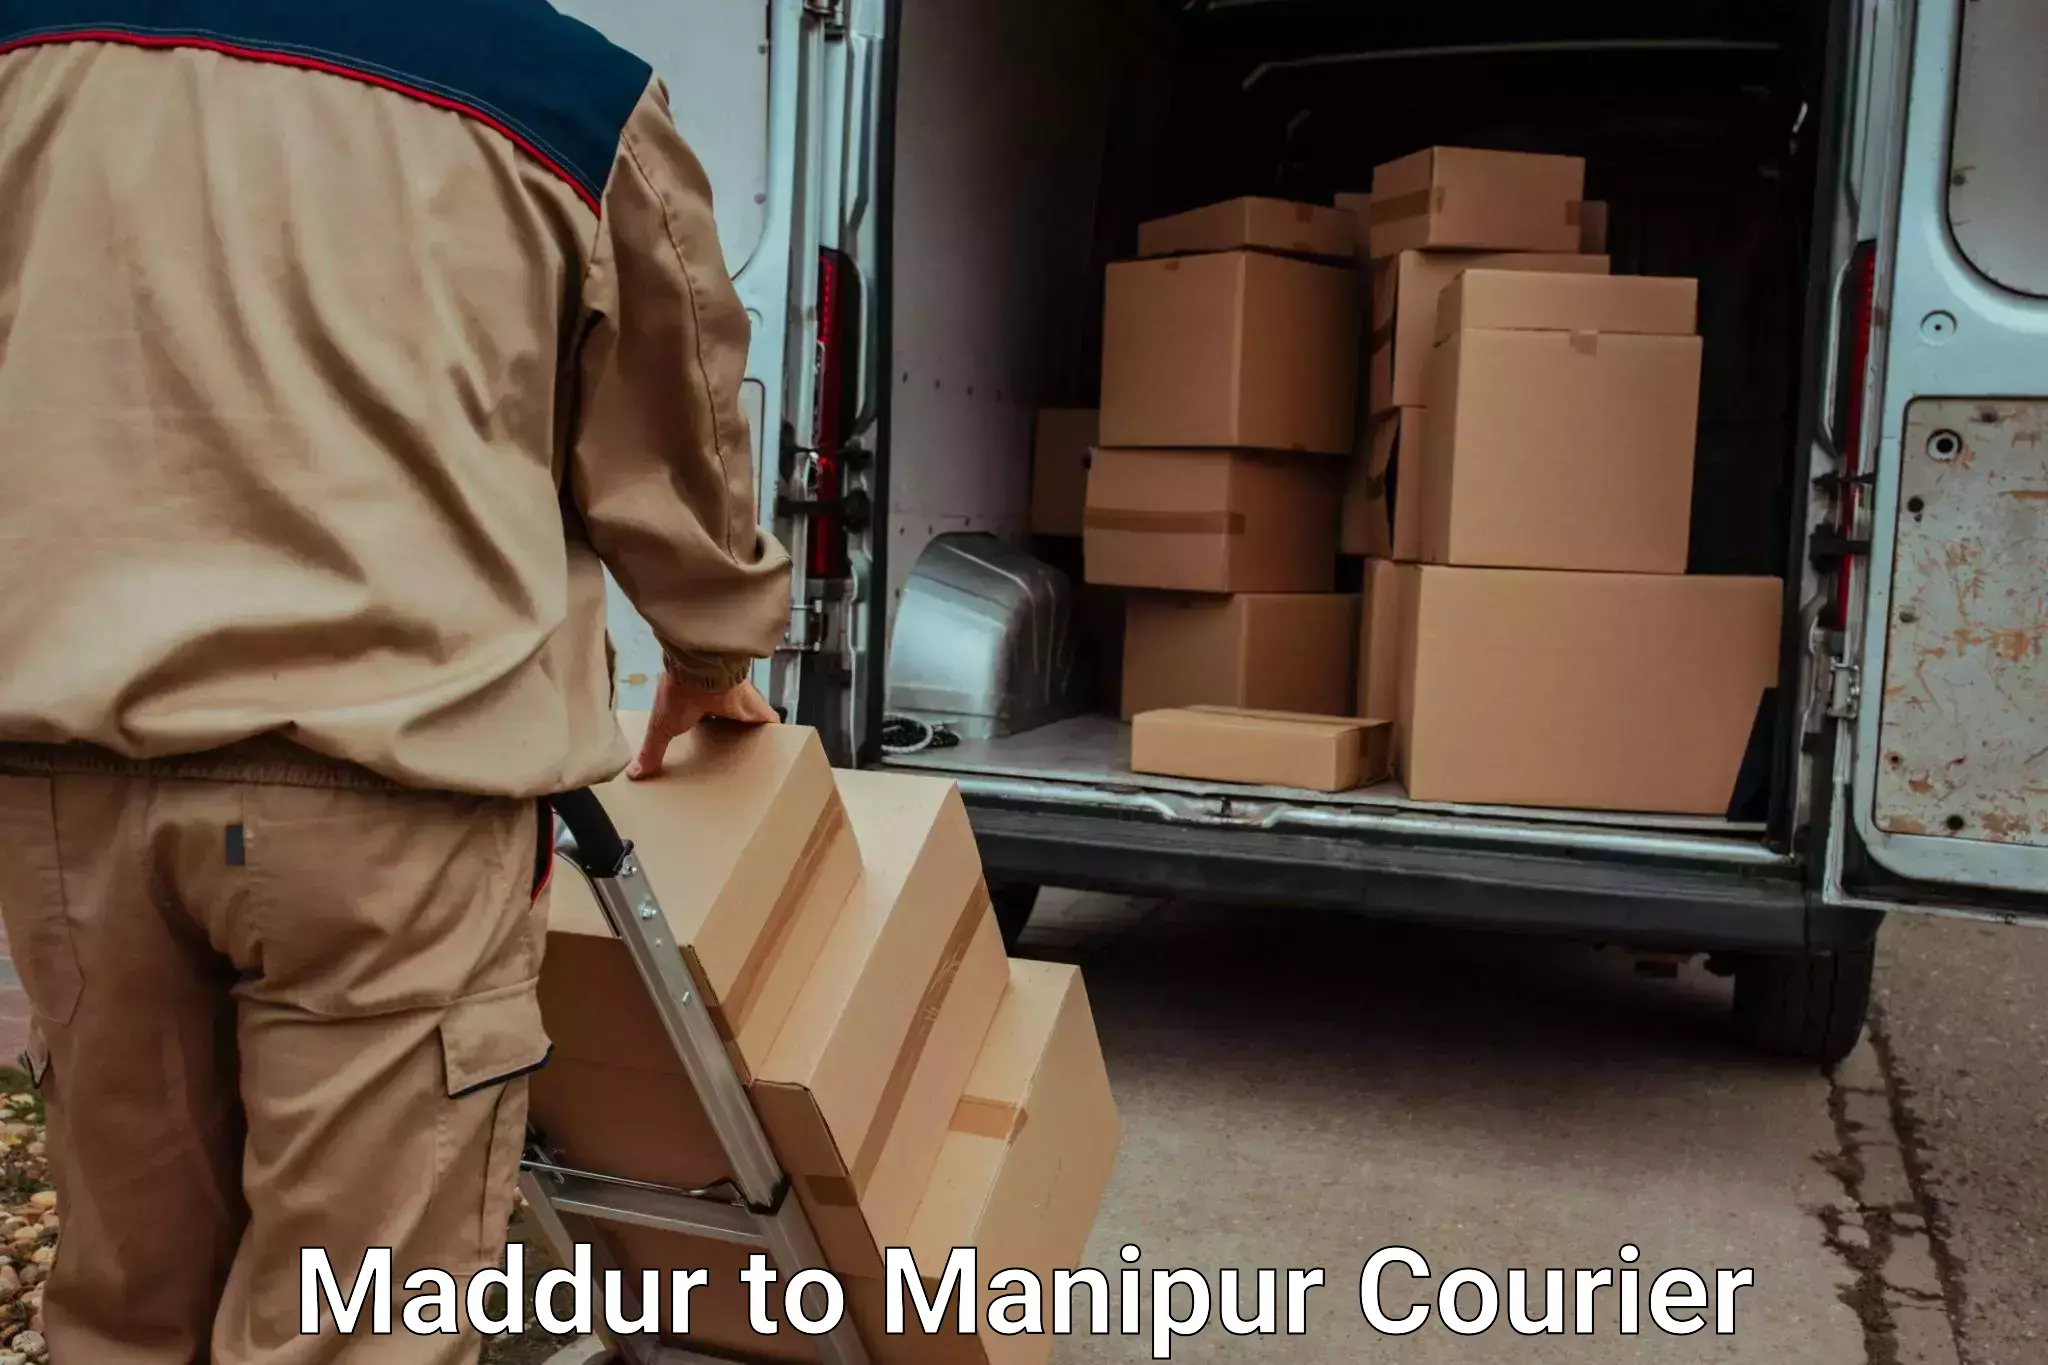 Professional moving company Maddur to Manipur